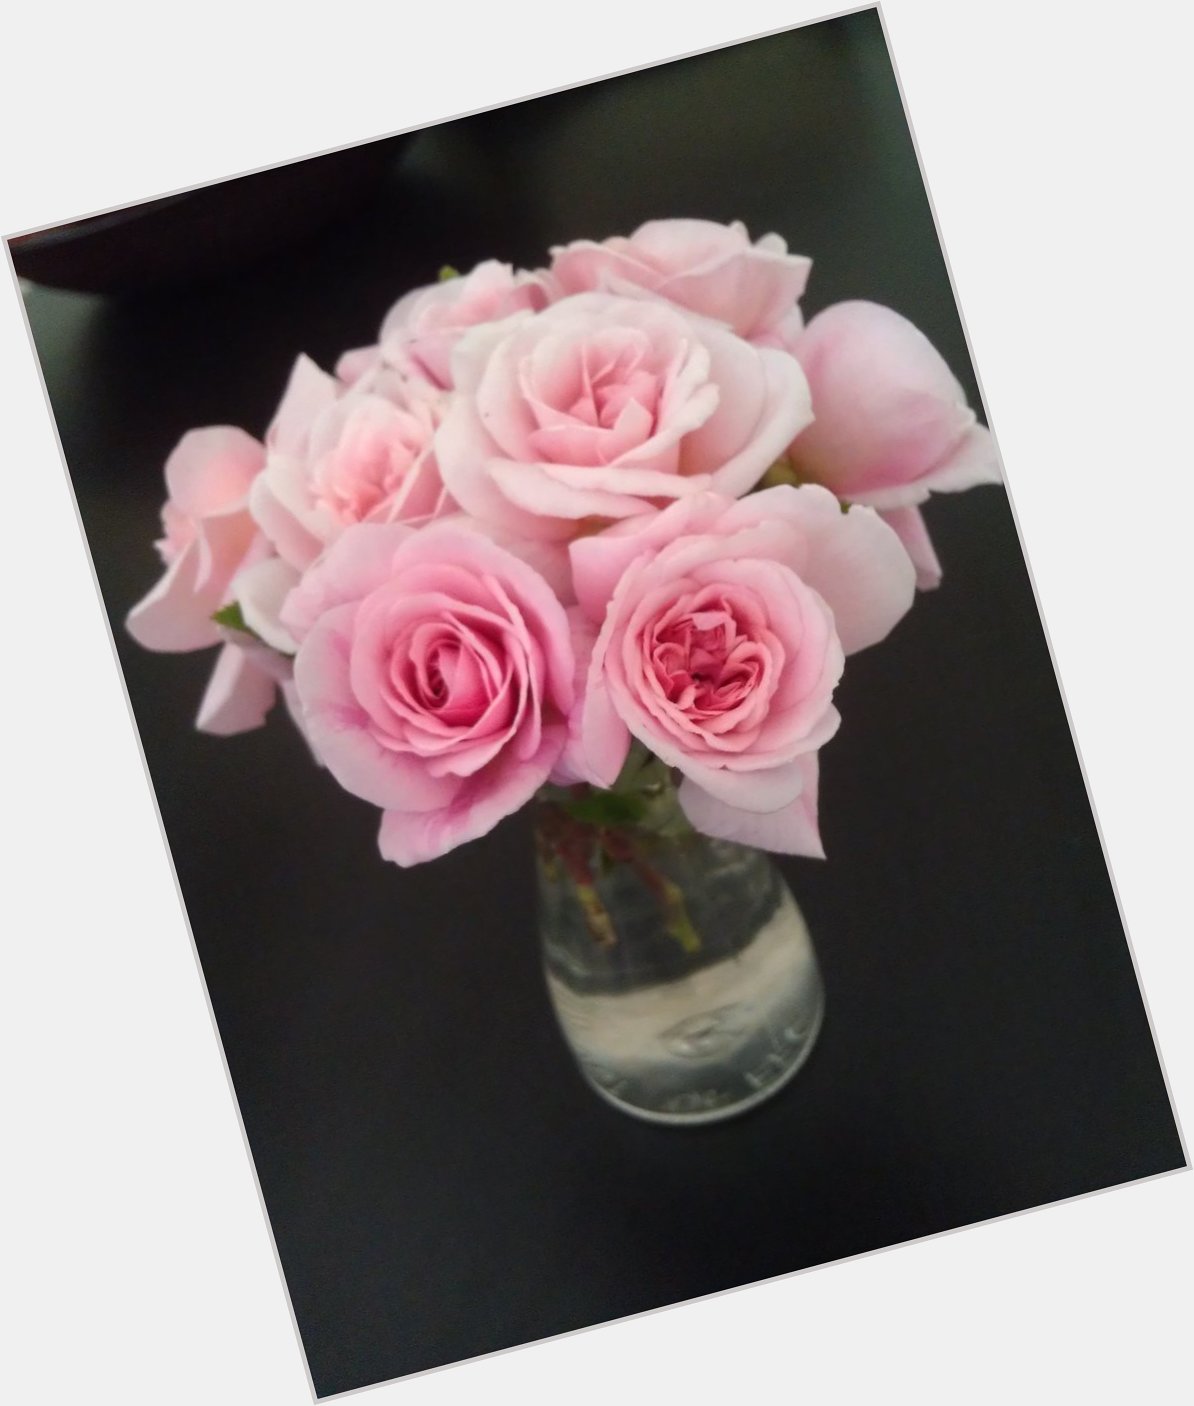  happy birthday wonderful Gates!  God bless you!  Mini roses for you! 